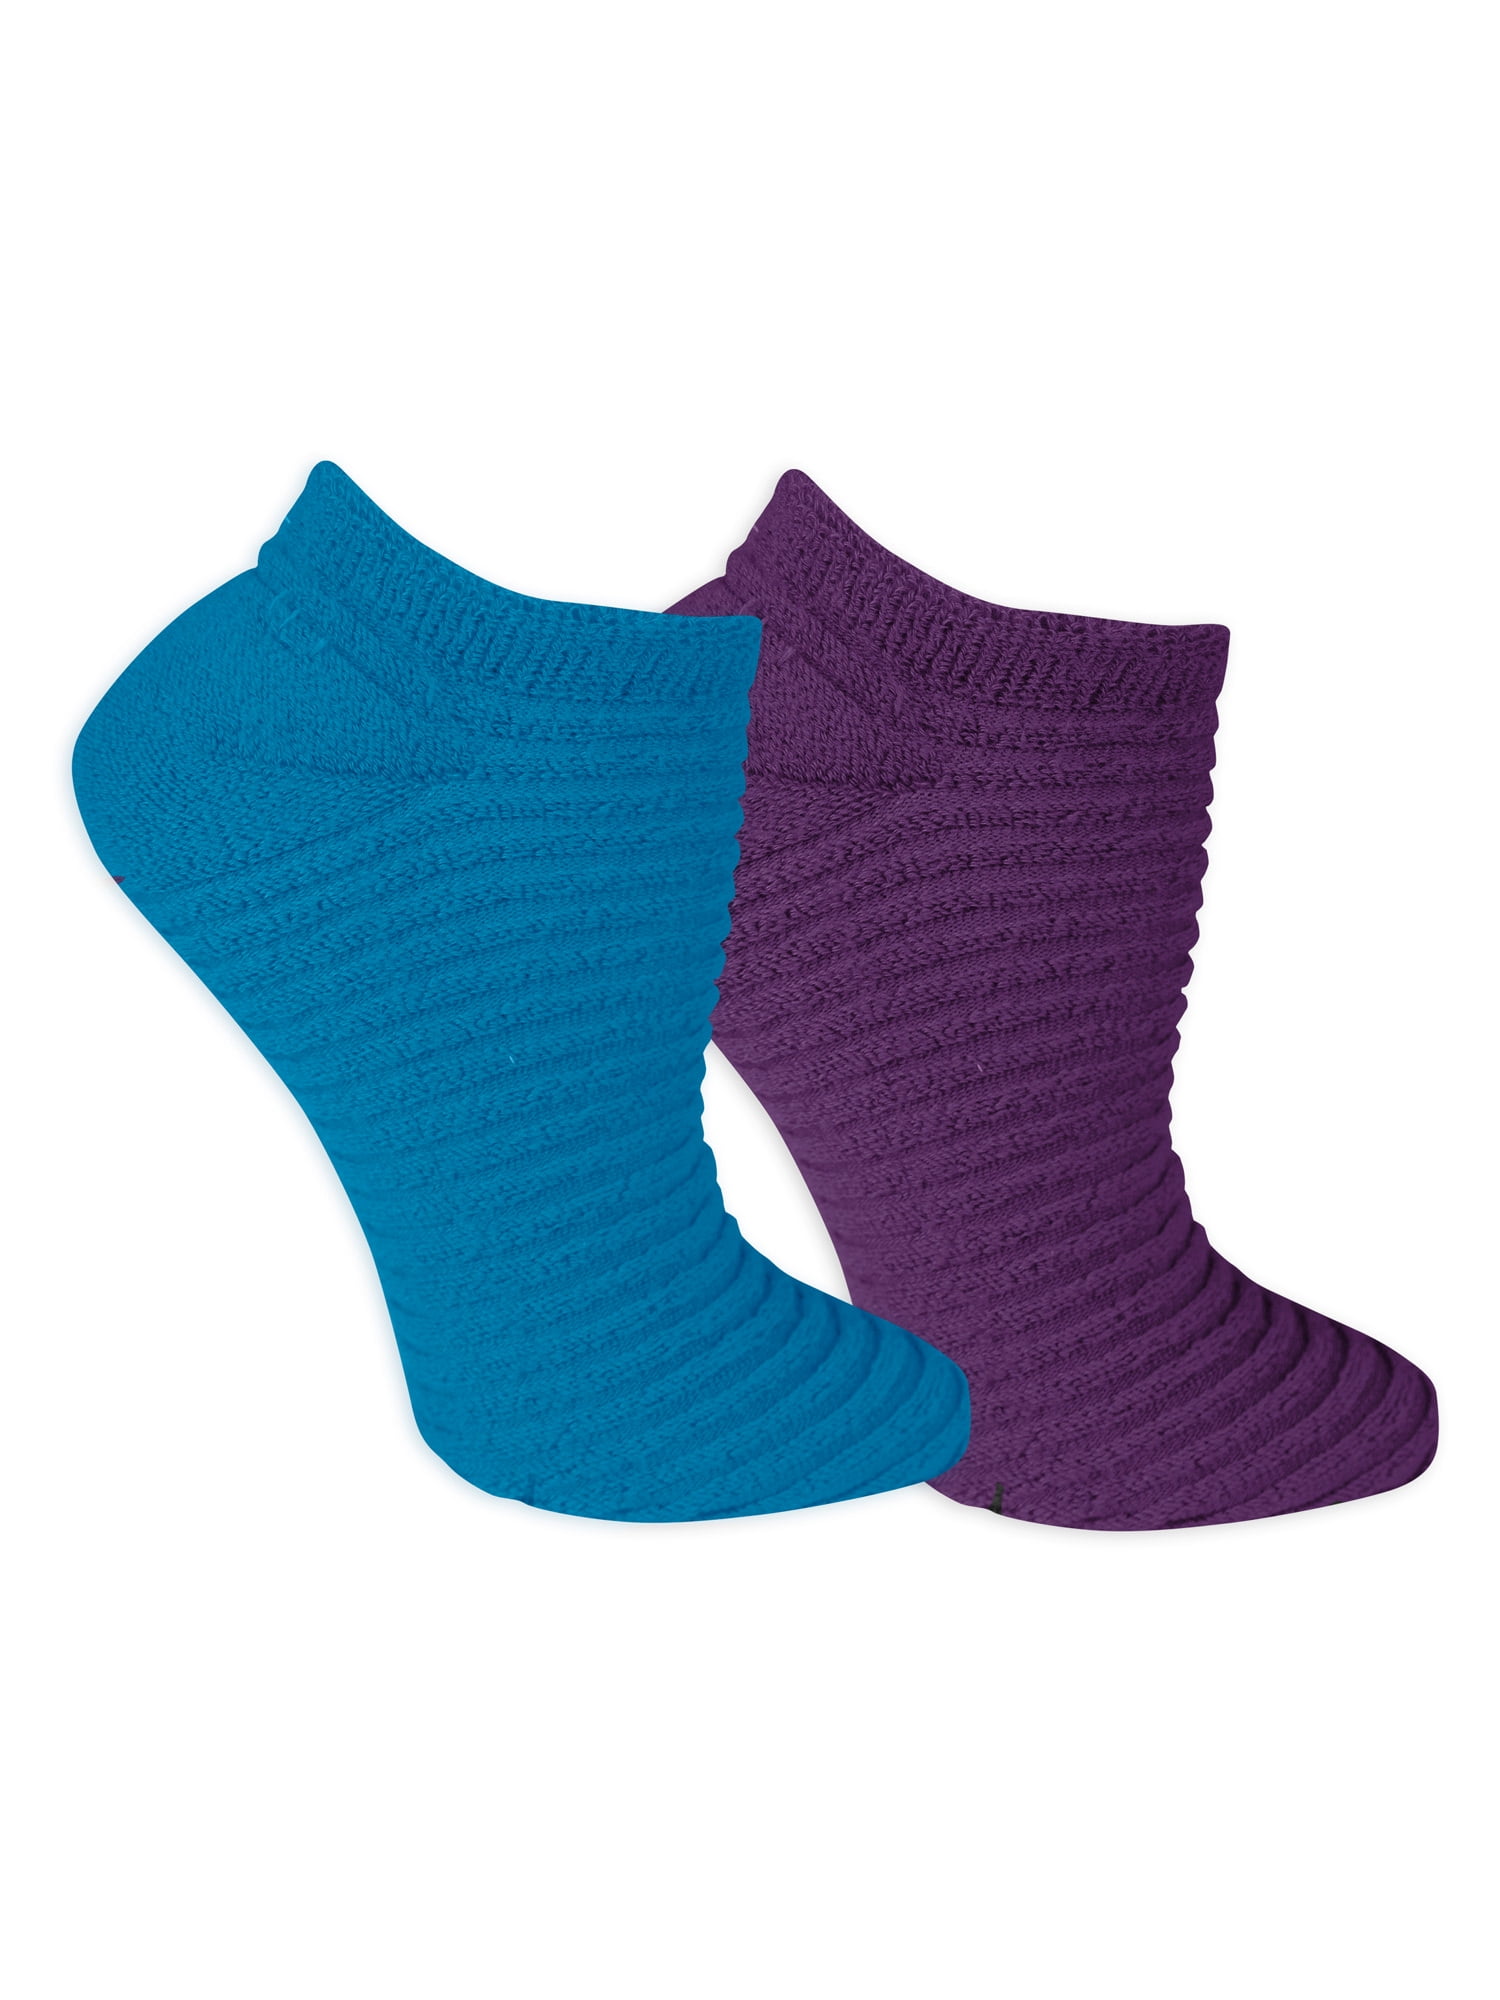 Women's Pink, Purple, Blue Low Cut Ankle Non Skid Socks - 3 pairs - Gripjoy  Socks